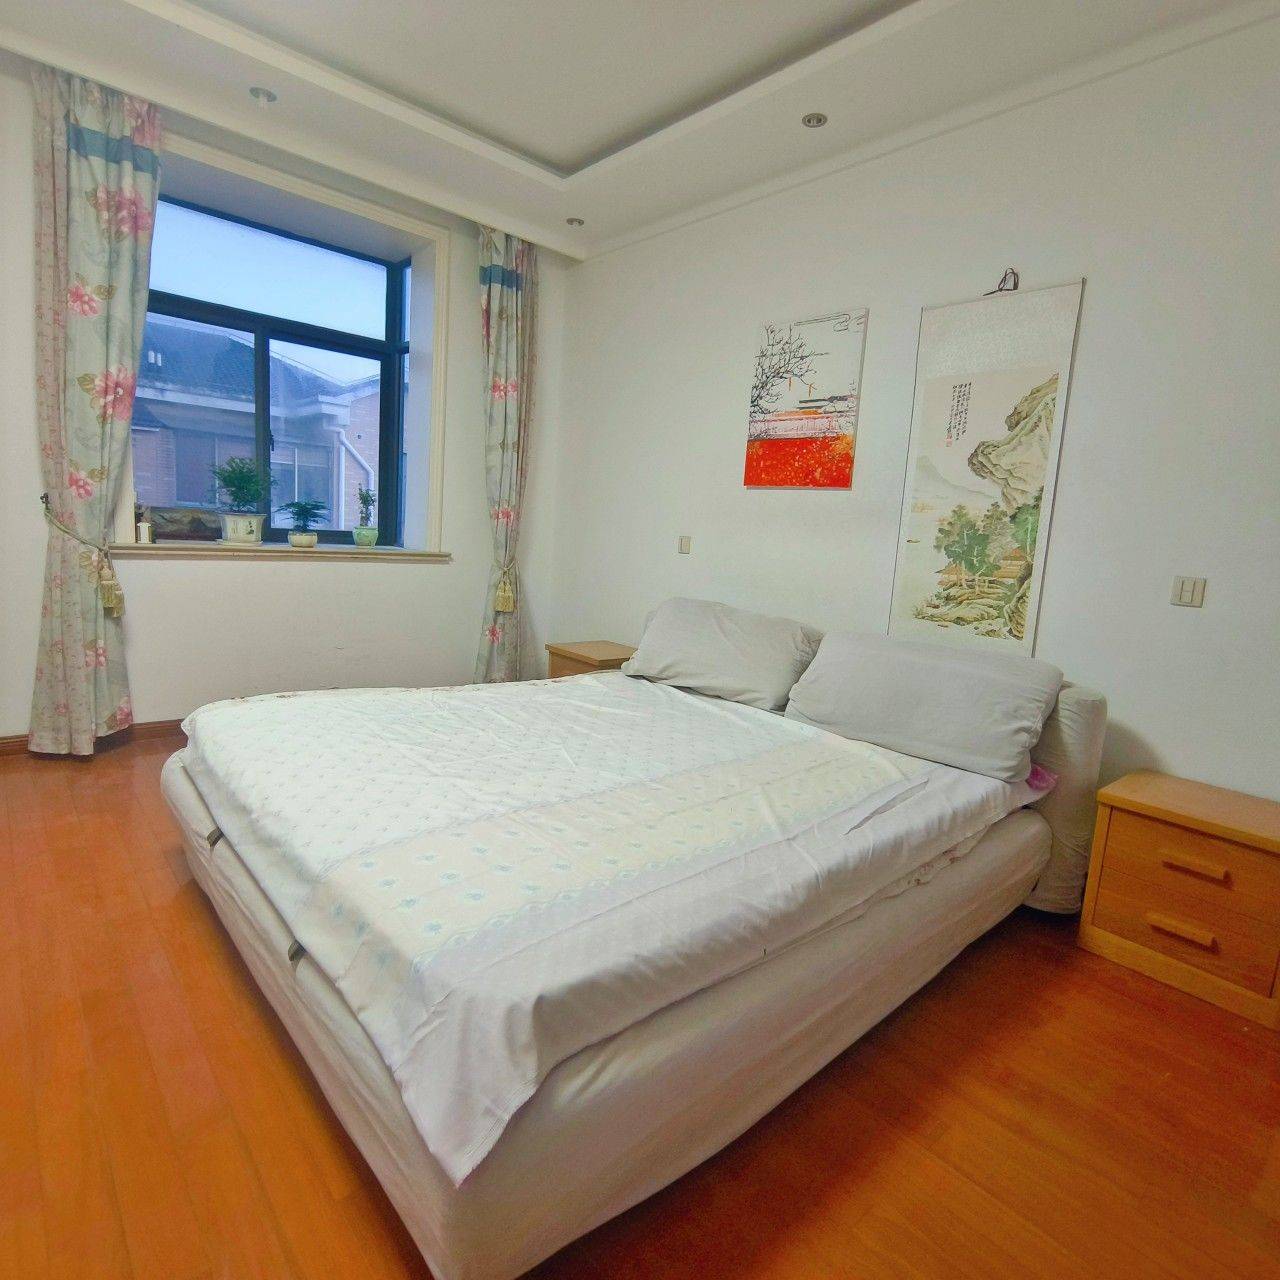 Shanghai-Qingpu-Cozy Home,Clean&Comfy,No Gender Limit,Chilled,LGBTQ Friendly,Pet Friendly